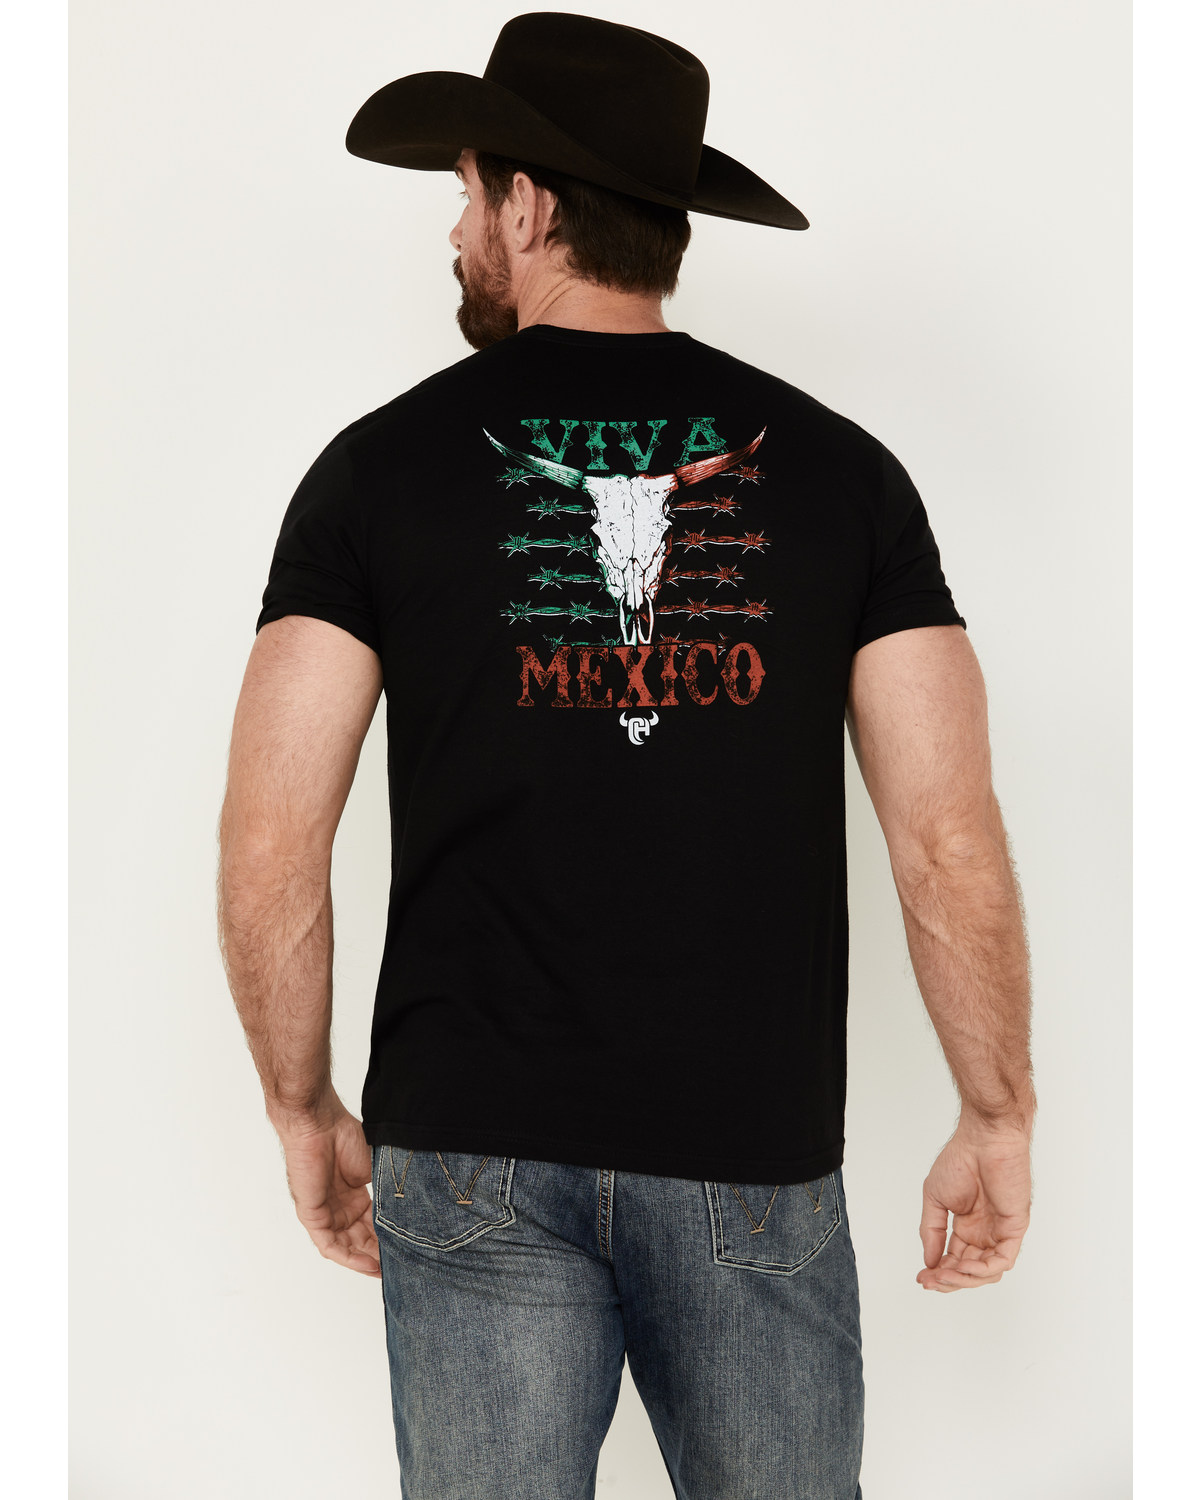 Cowboy Hardware Men's Viva Mexico Steer Head Short Sleeve Graphic T-Shirt